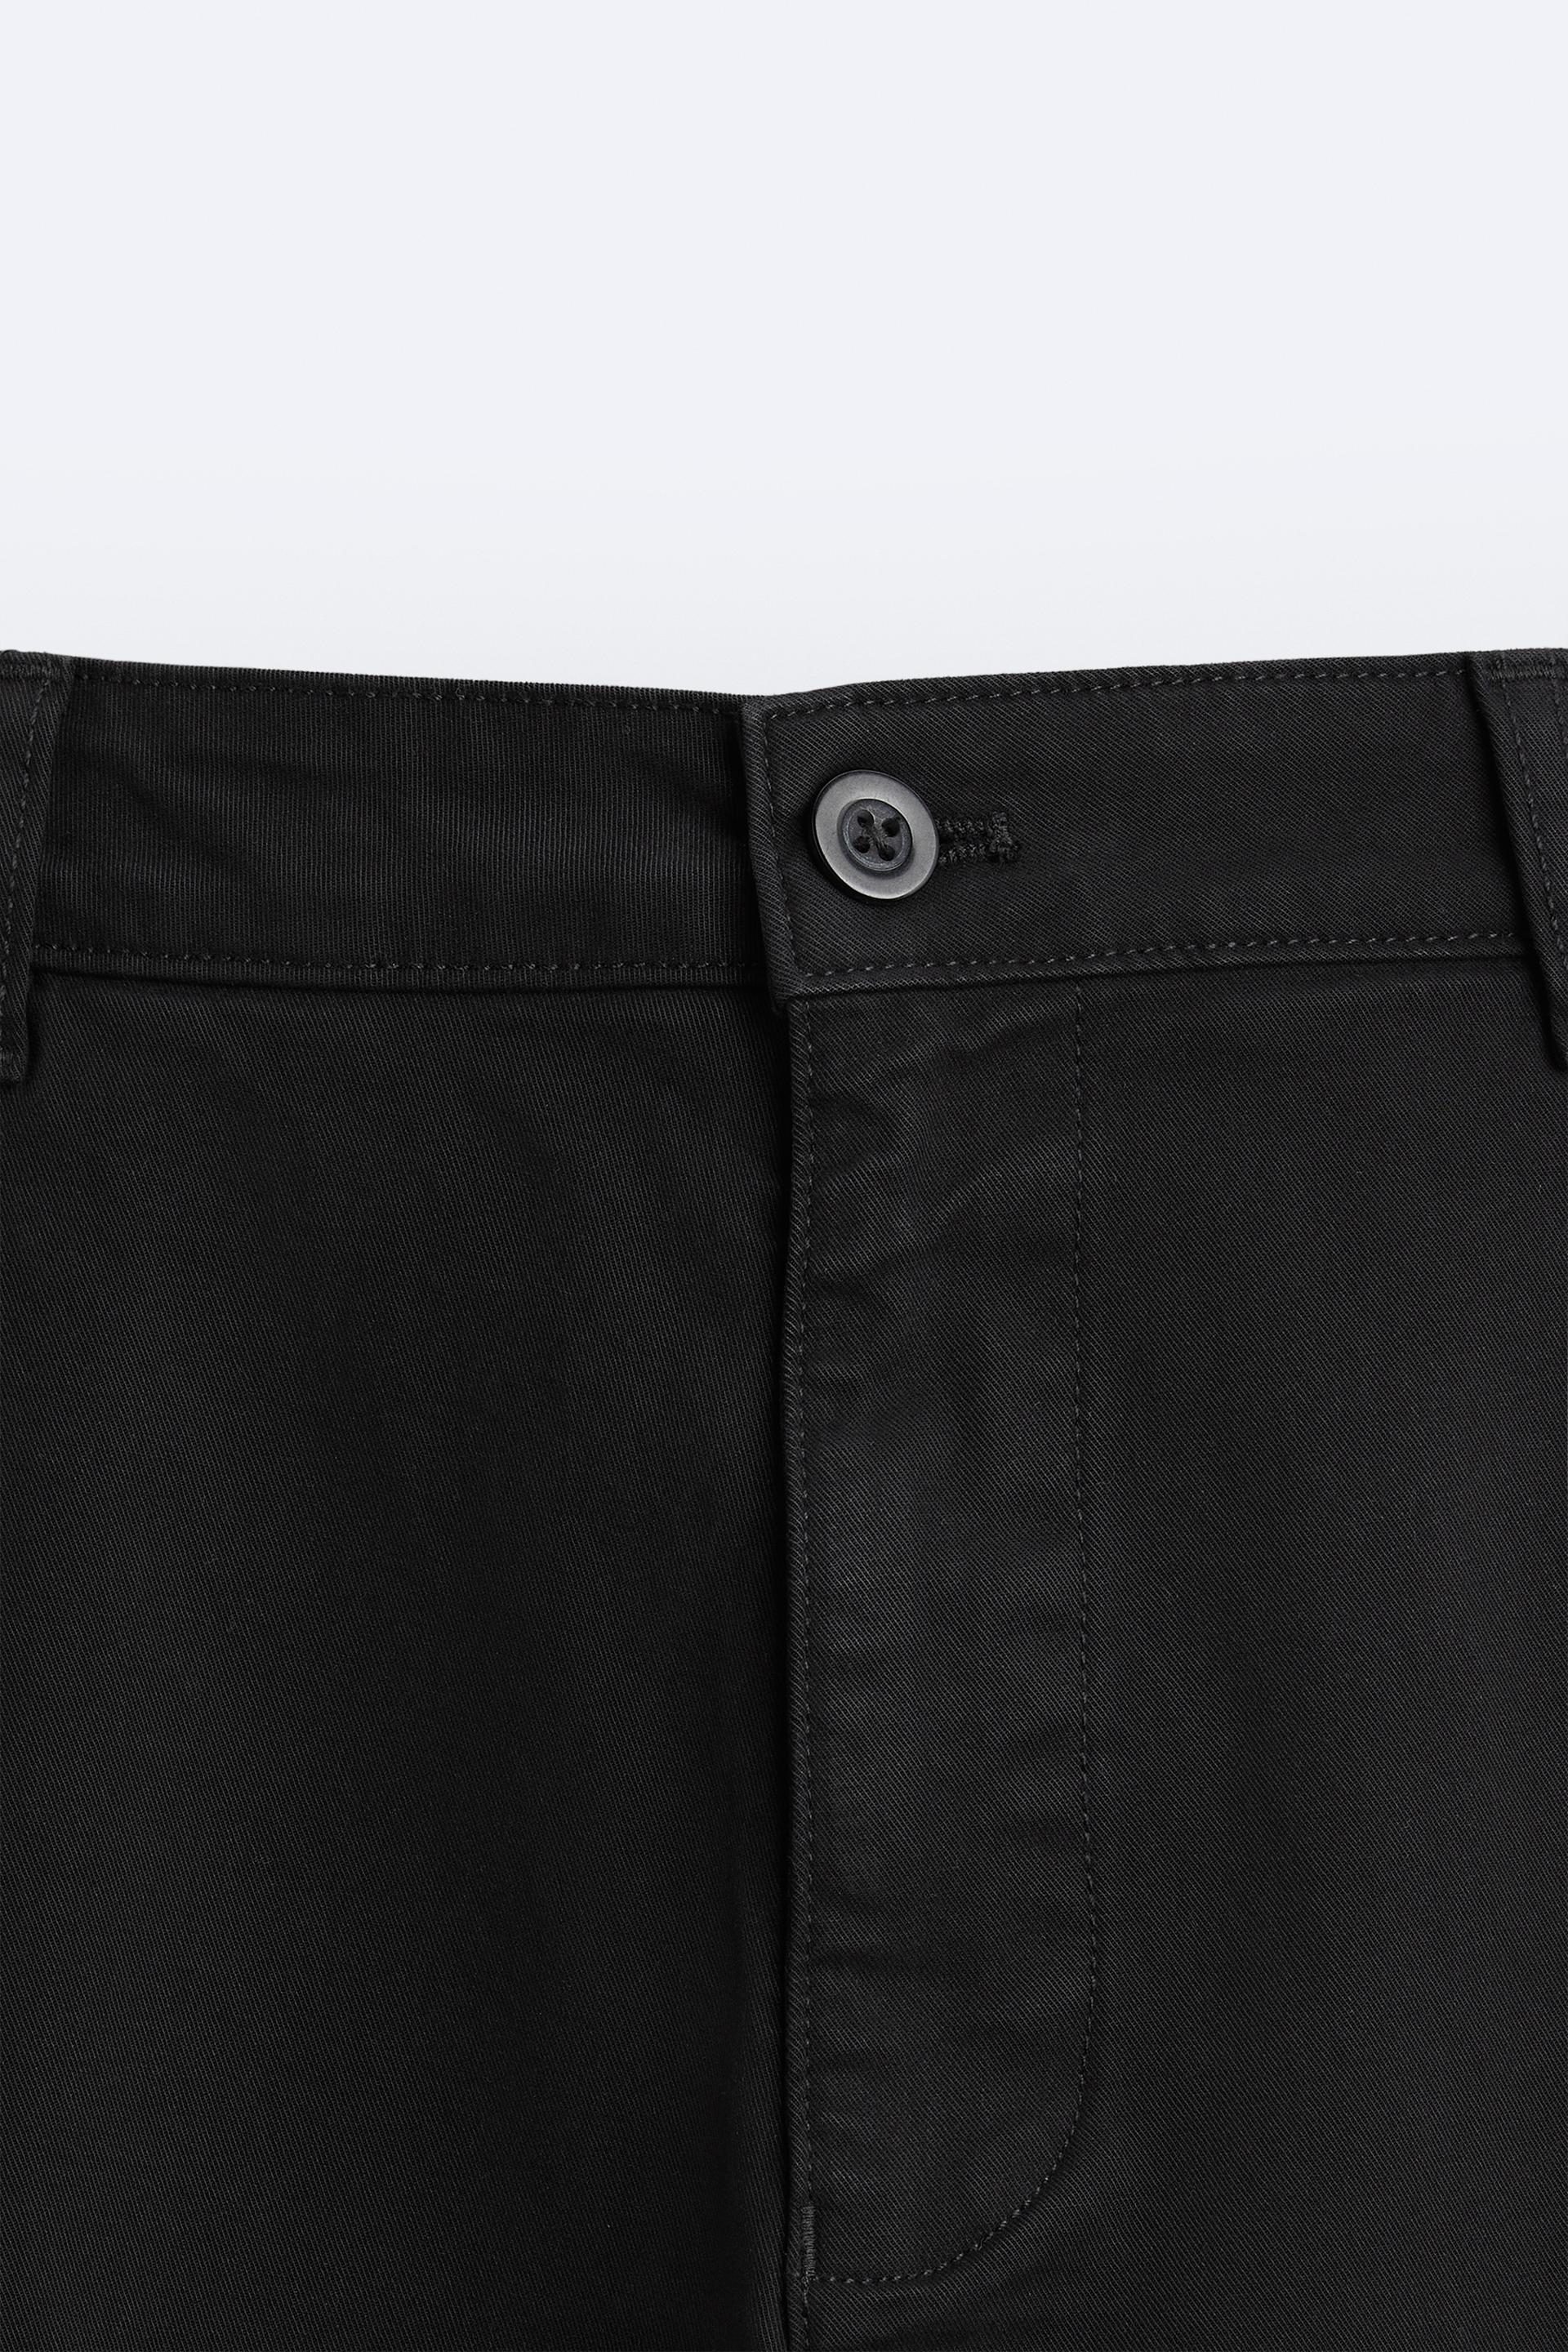 ZARA Pantalon chino de couleur noir en soldes pas cher 1745001-noir00 - Modz